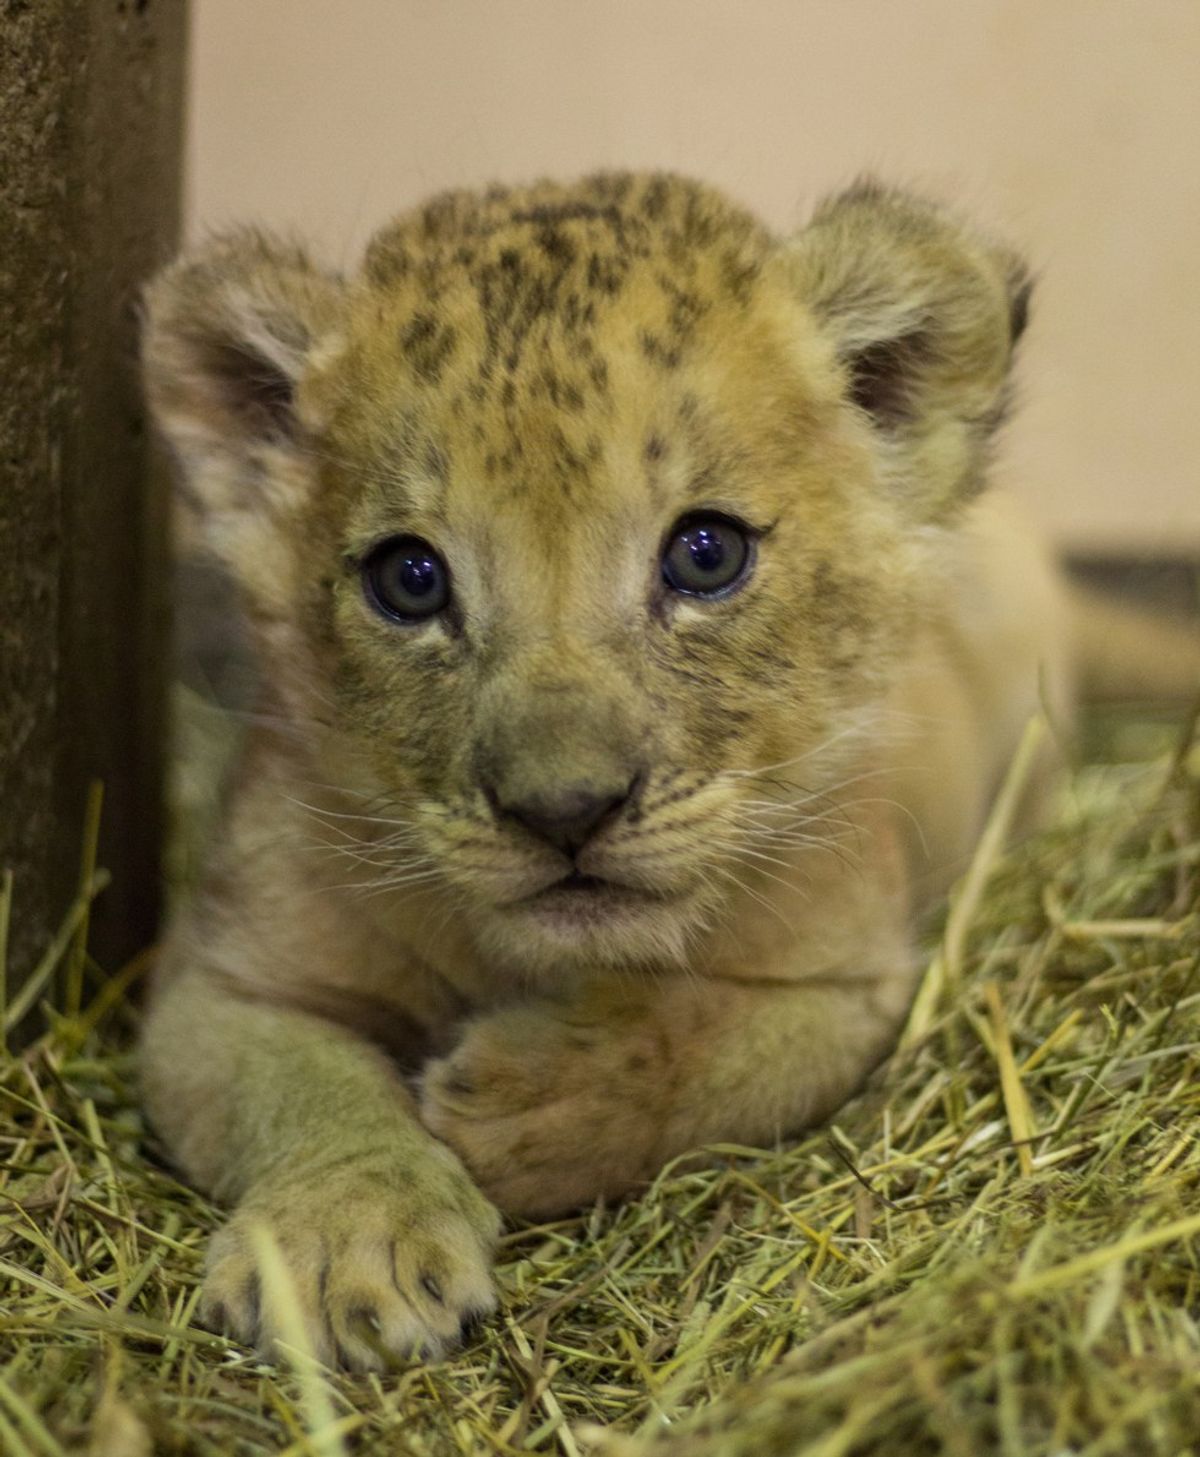 Tobias The Lion Cub Will Make You Say "Awe!"